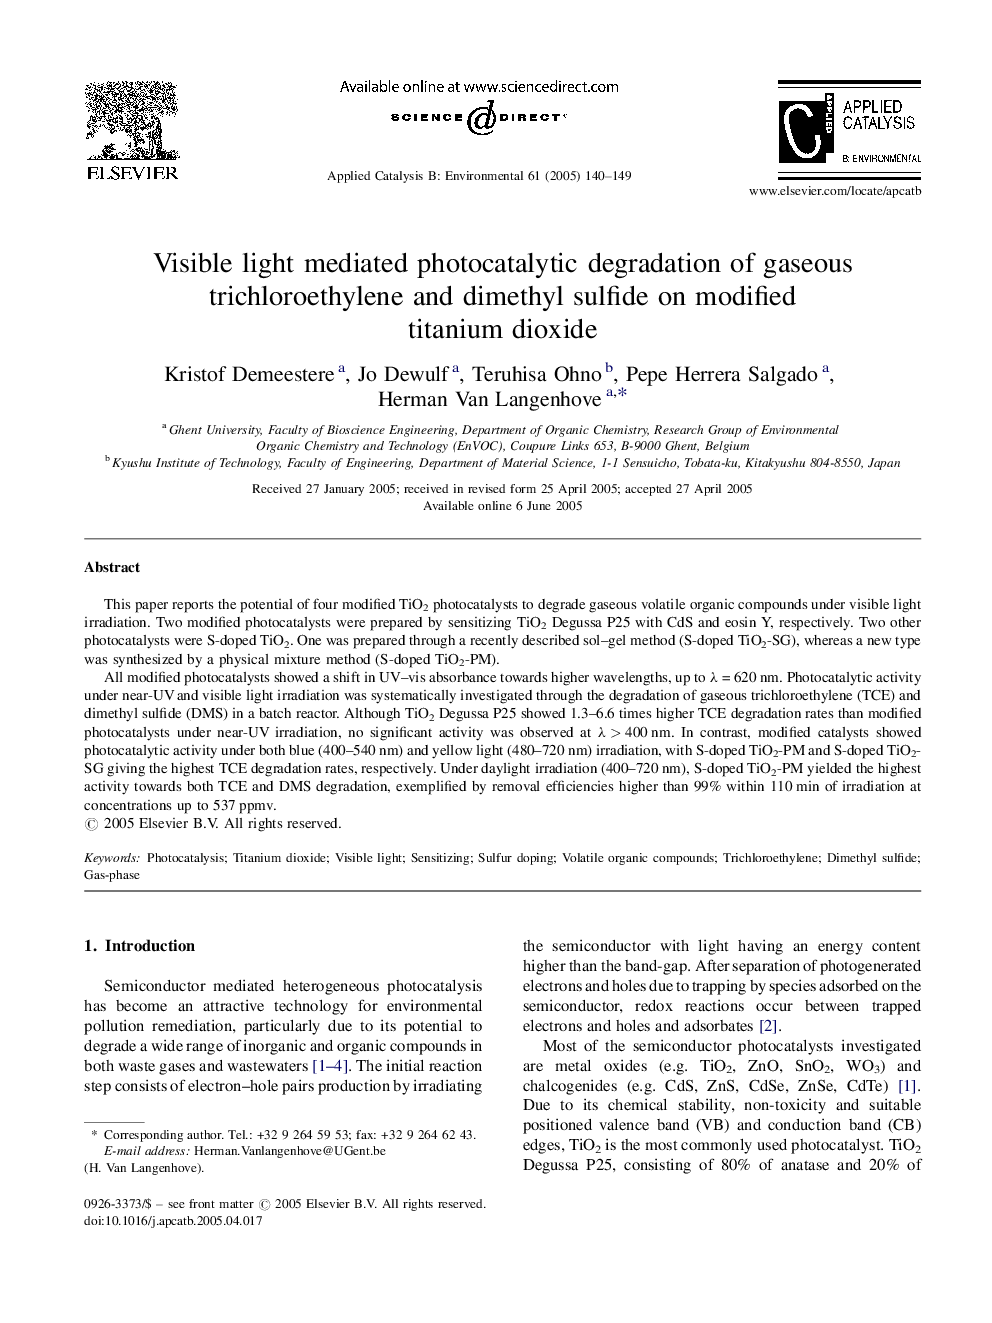 Visible light mediated photocatalytic degradation of gaseous trichloroethylene and dimethyl sulfide on modified titanium dioxide